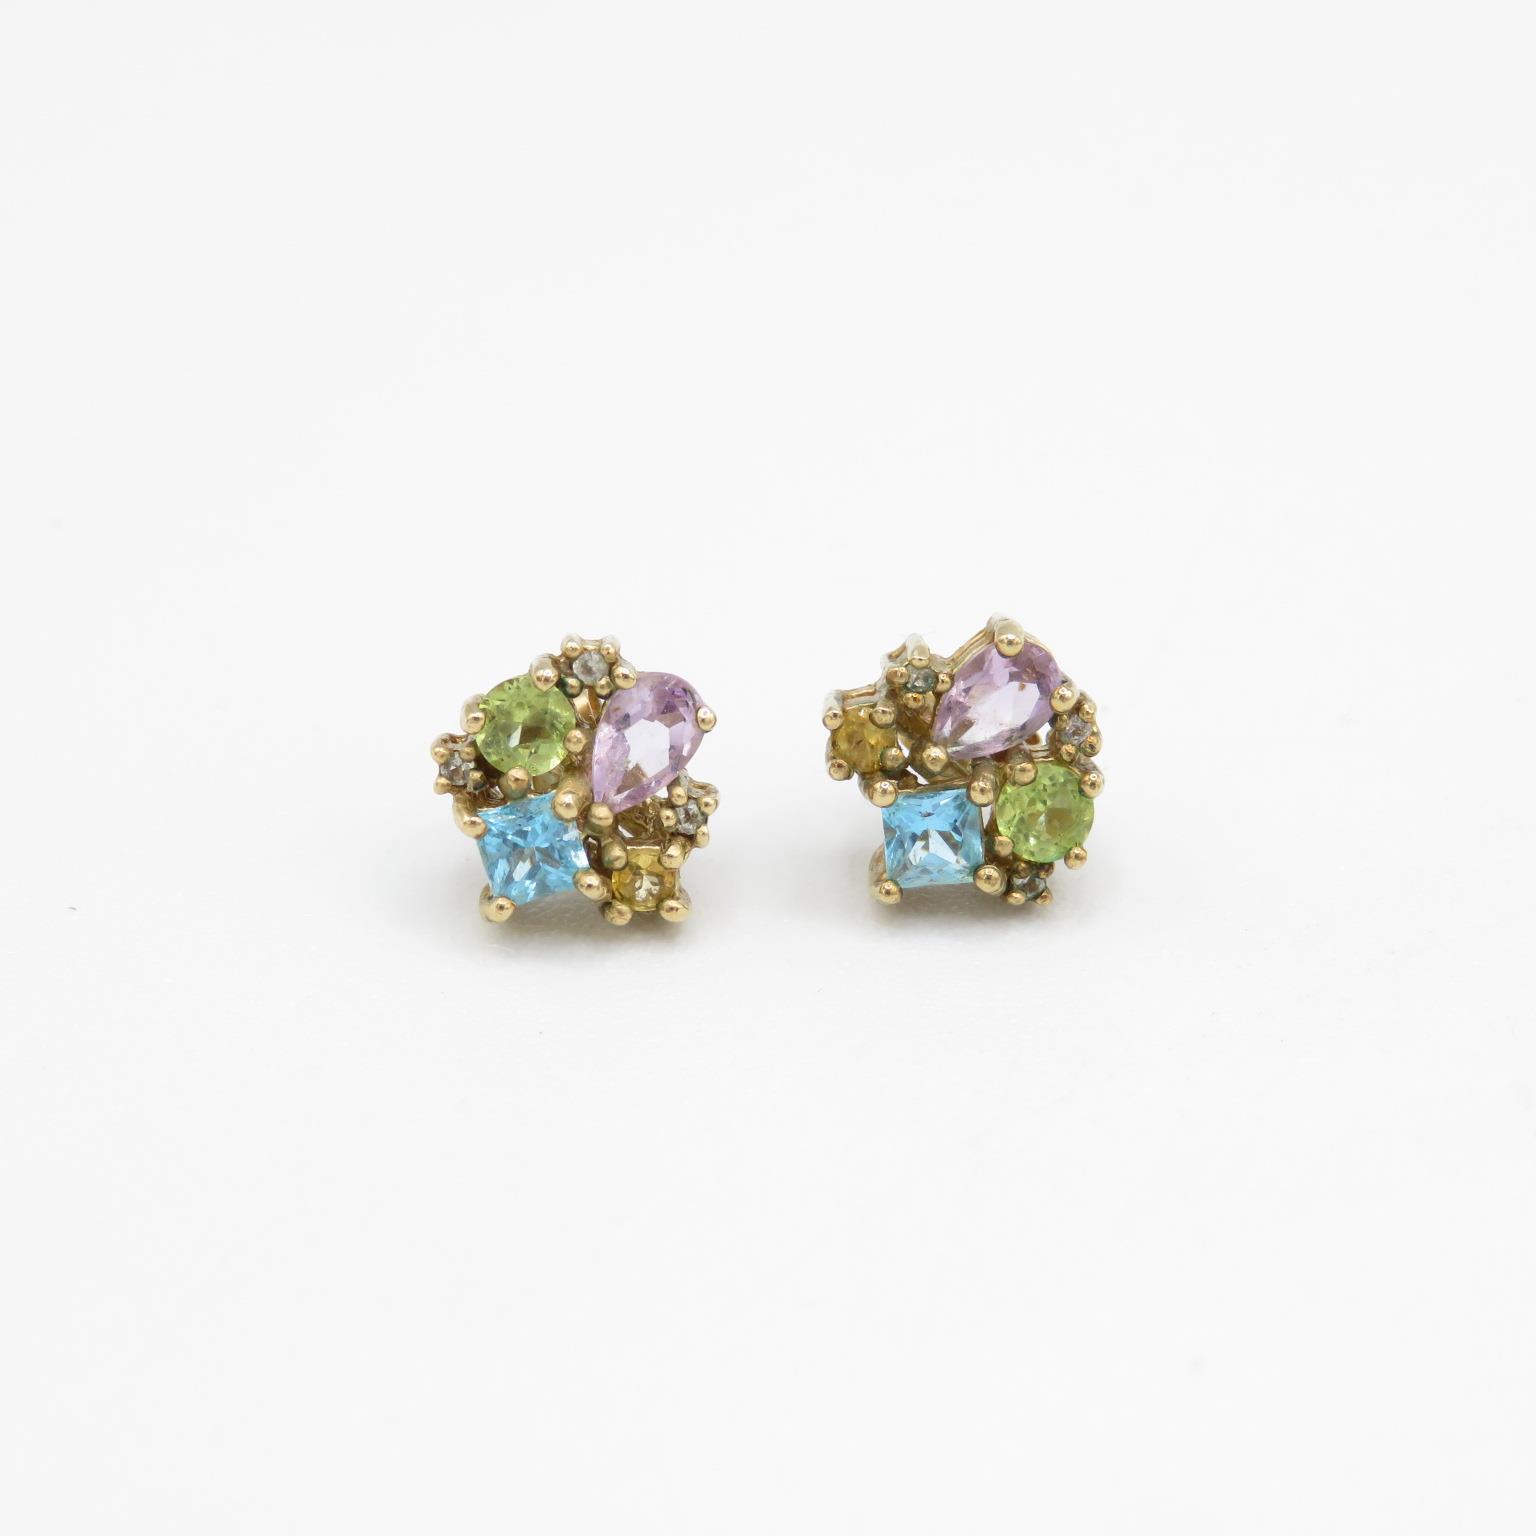 9ct gold multi gemstone cluster stud earrings, gemstones including: amethyst, topaz, citrine,